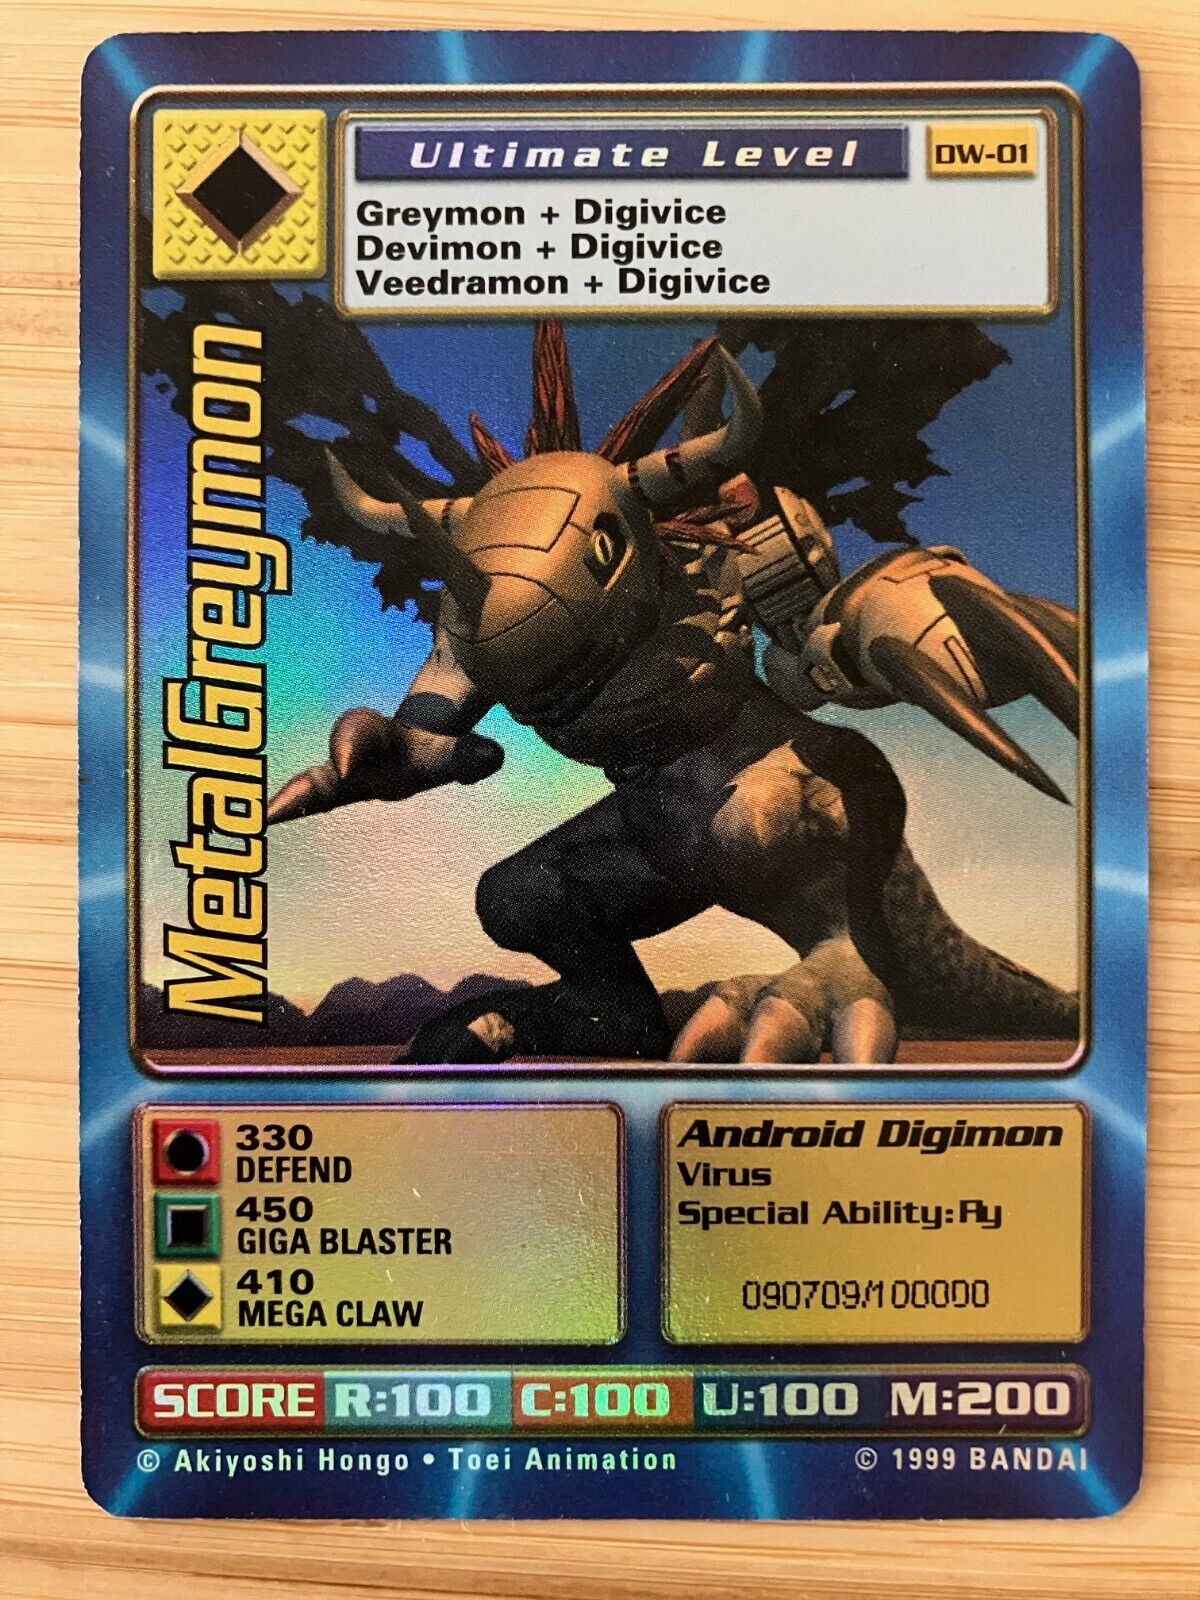 Digimon World PlayStation Promo DW-01 MetalGreymon - number 090709 / 100,000